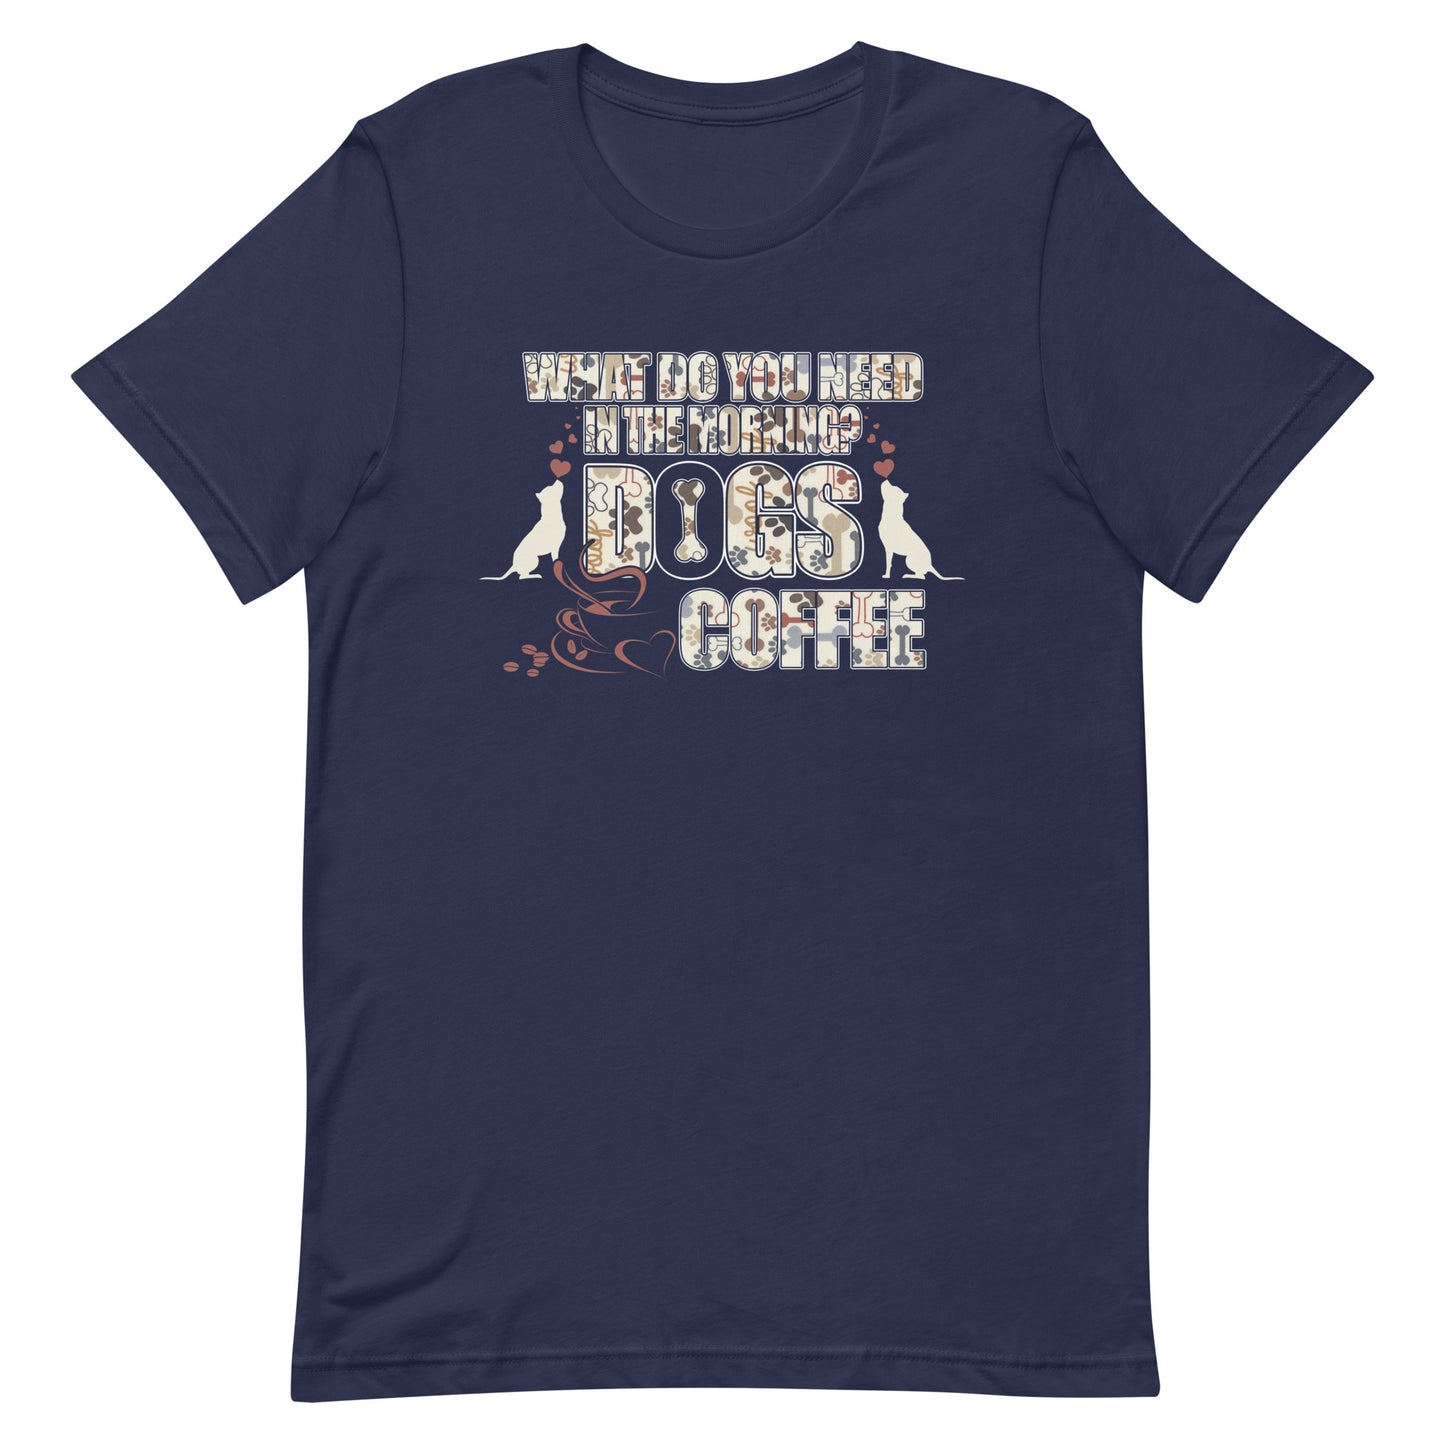 Dogs & Coffee T-Shirt